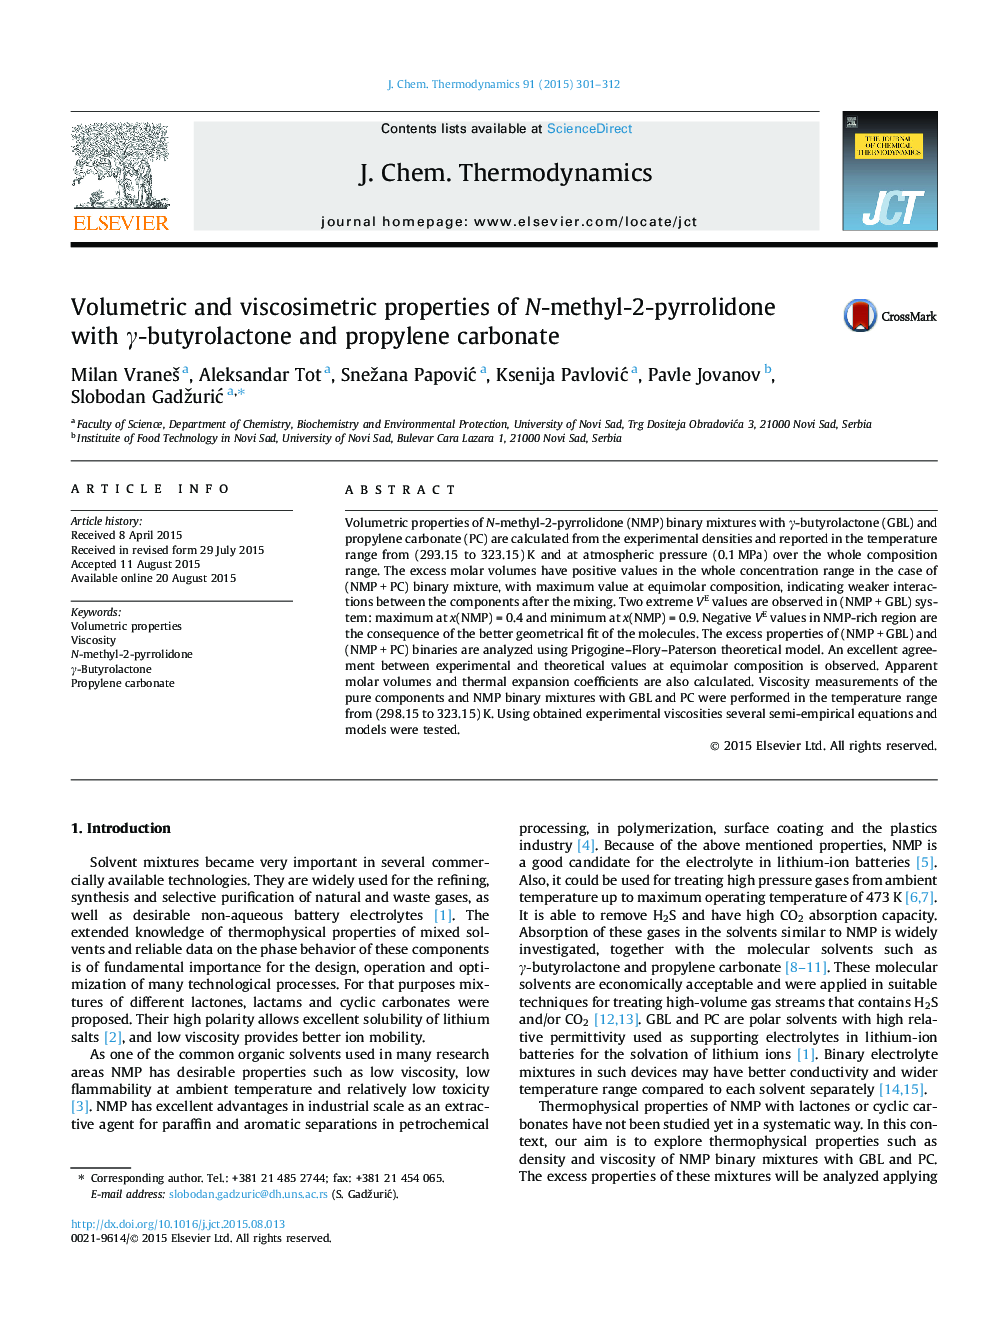 Volumetric and viscosimetric properties of N-methyl-2-pyrrolidone with Î³-butyrolactone and propylene carbonate